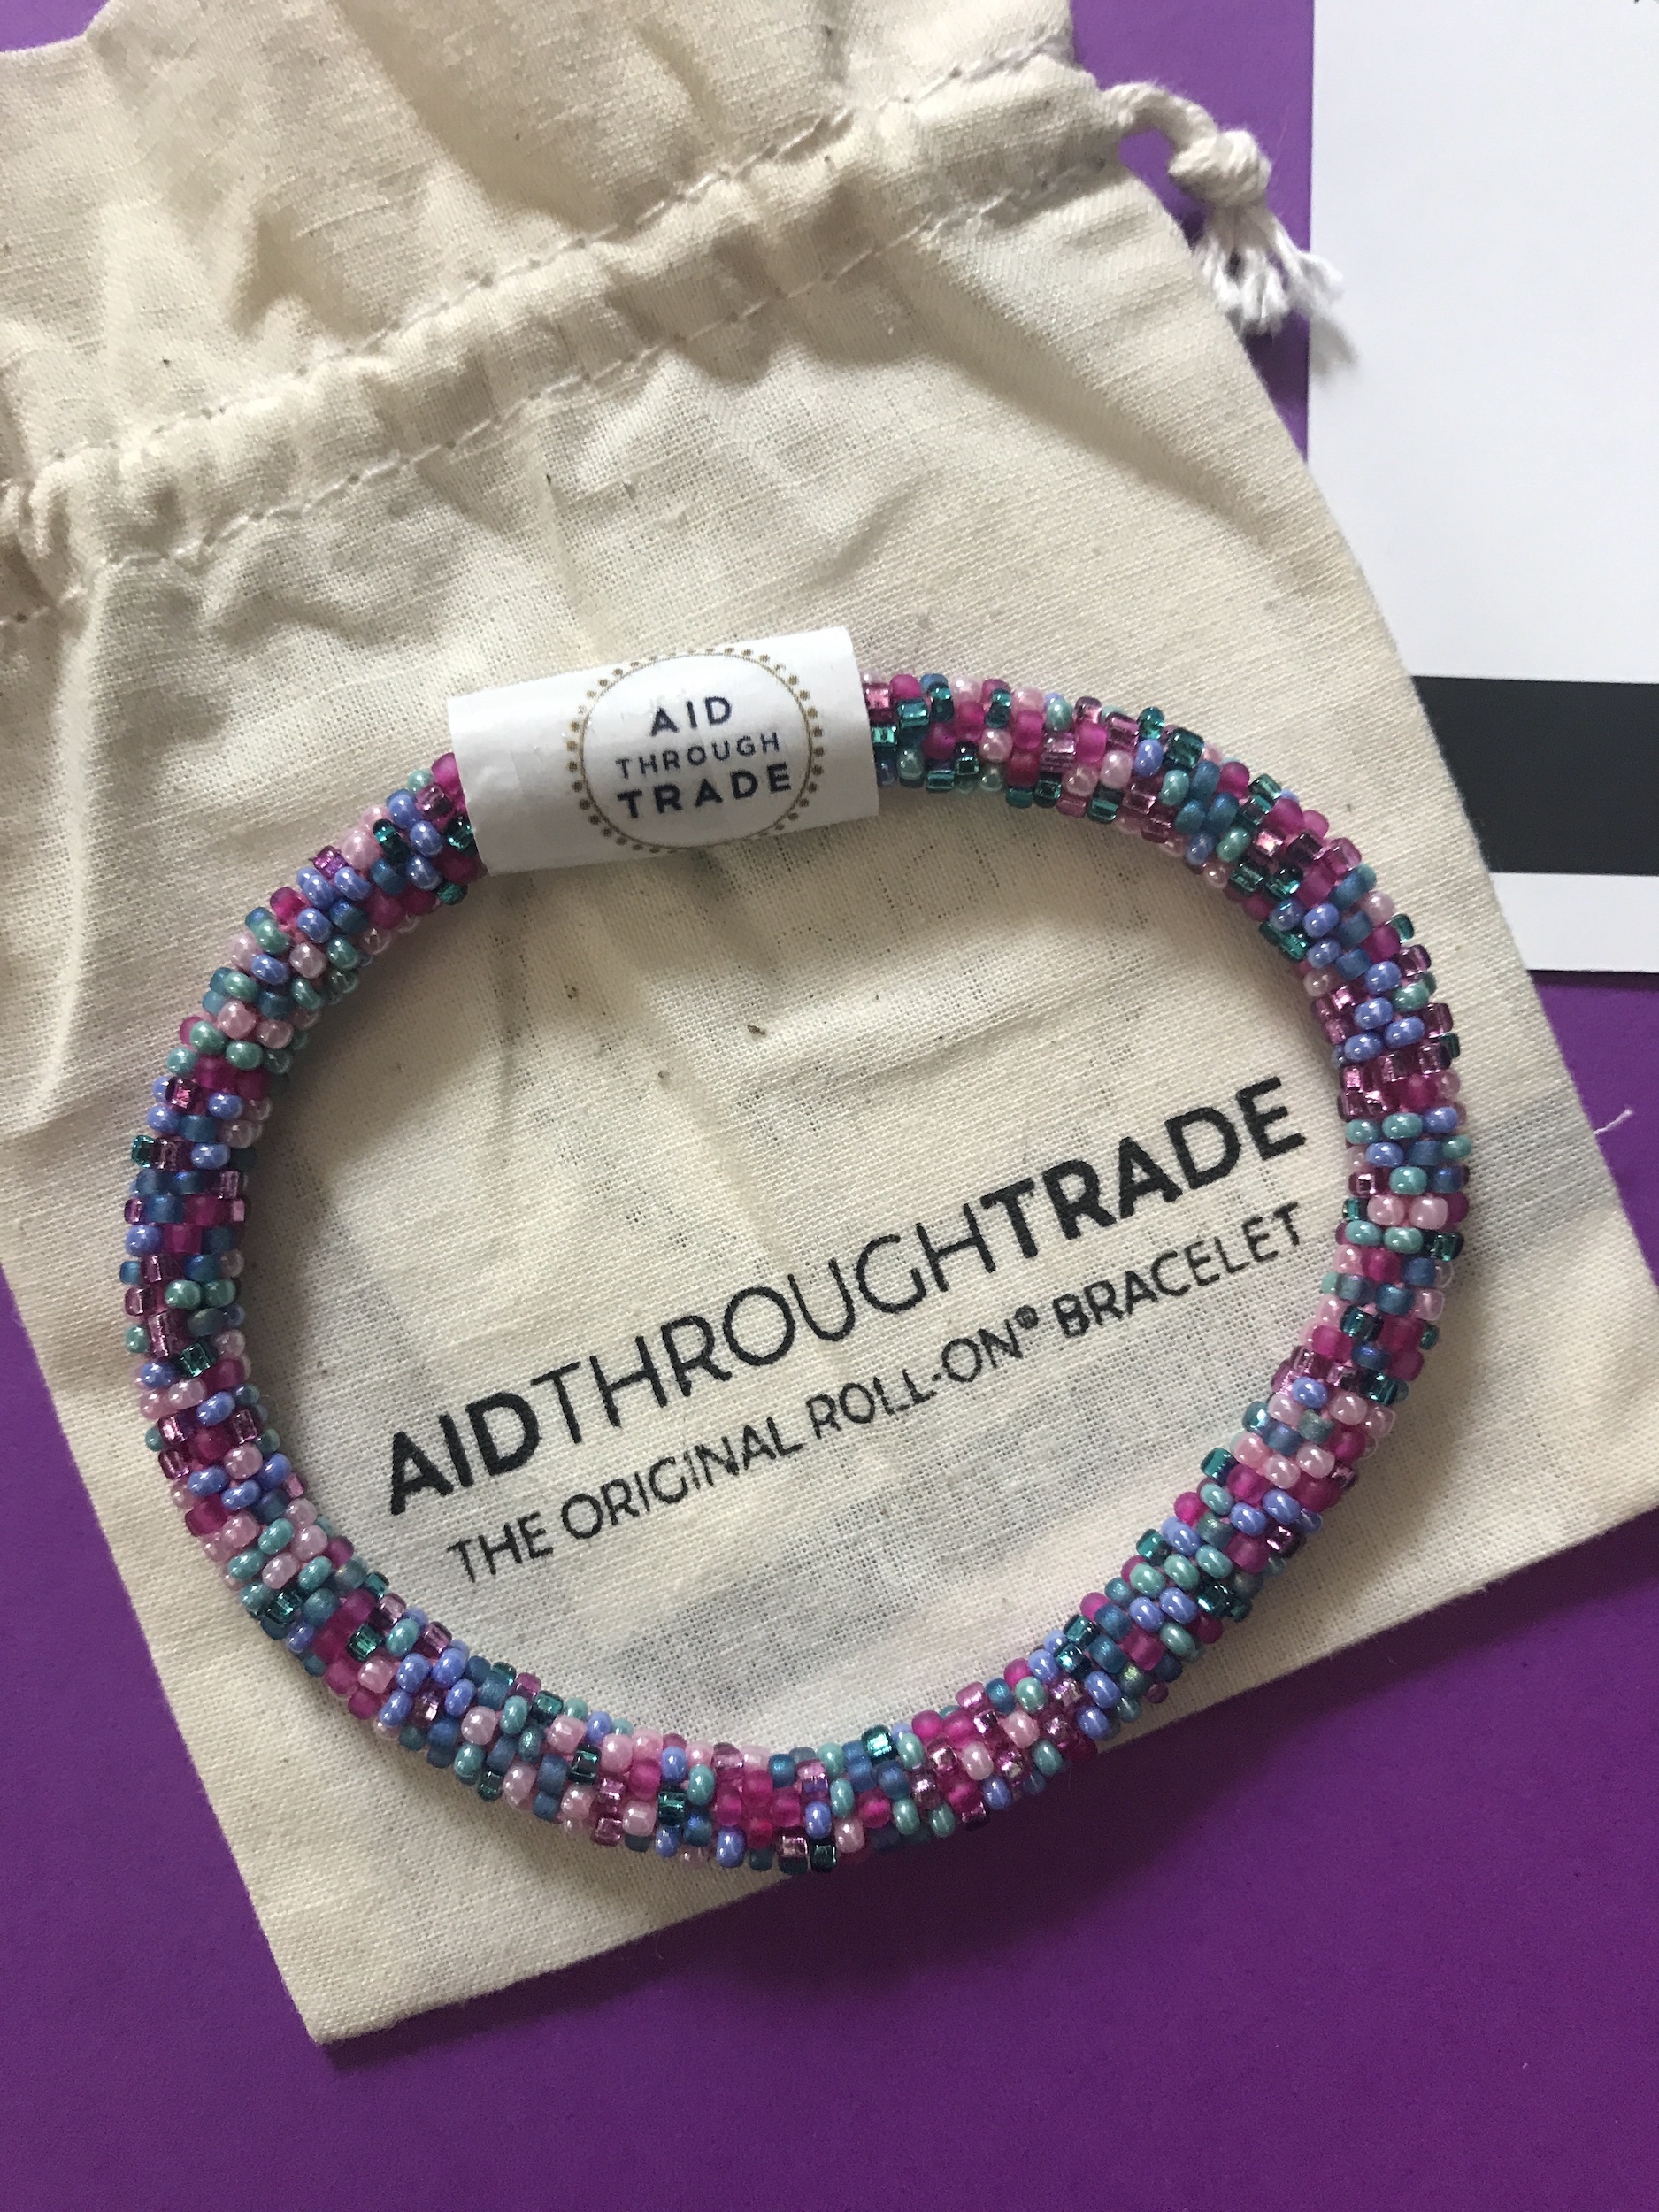 Aid Through Trade The Original Roll-on Bracelet